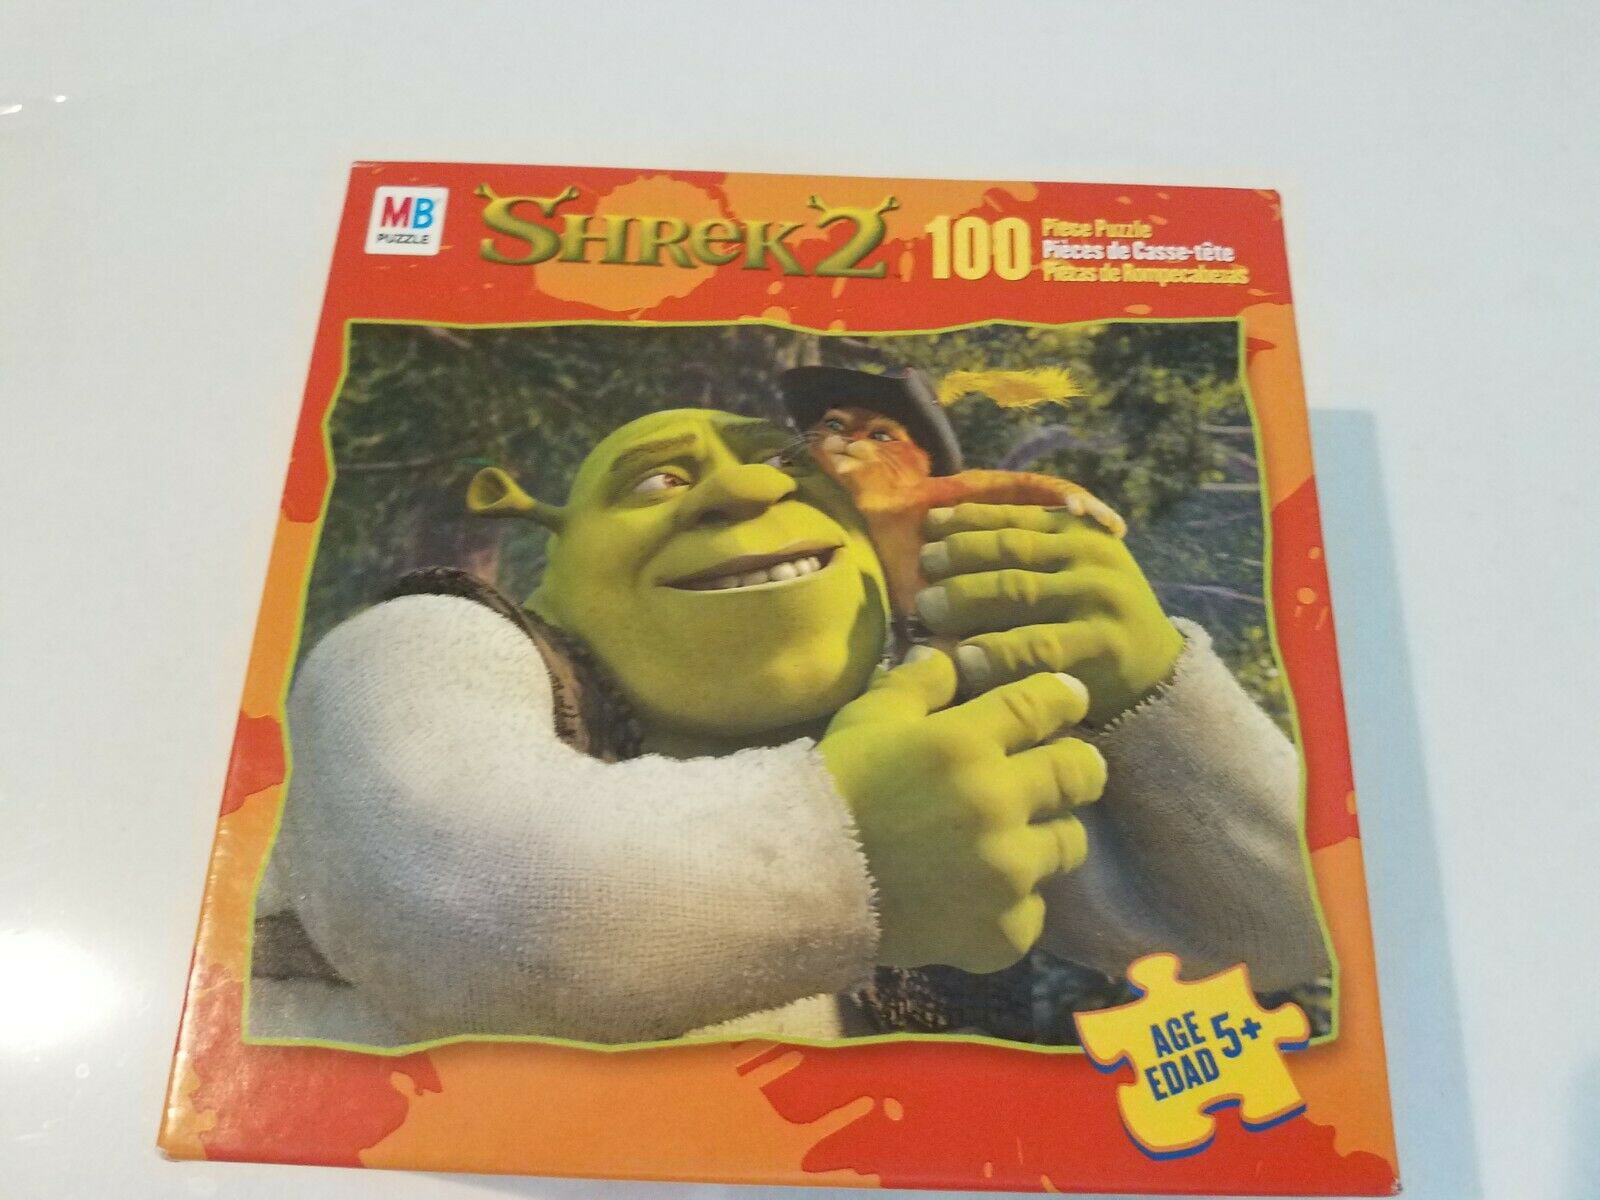 Case chief mineral Shrek 2 Shrek Hugs Puss 'n Boots 100 Piece Puzzle - Walmart.com